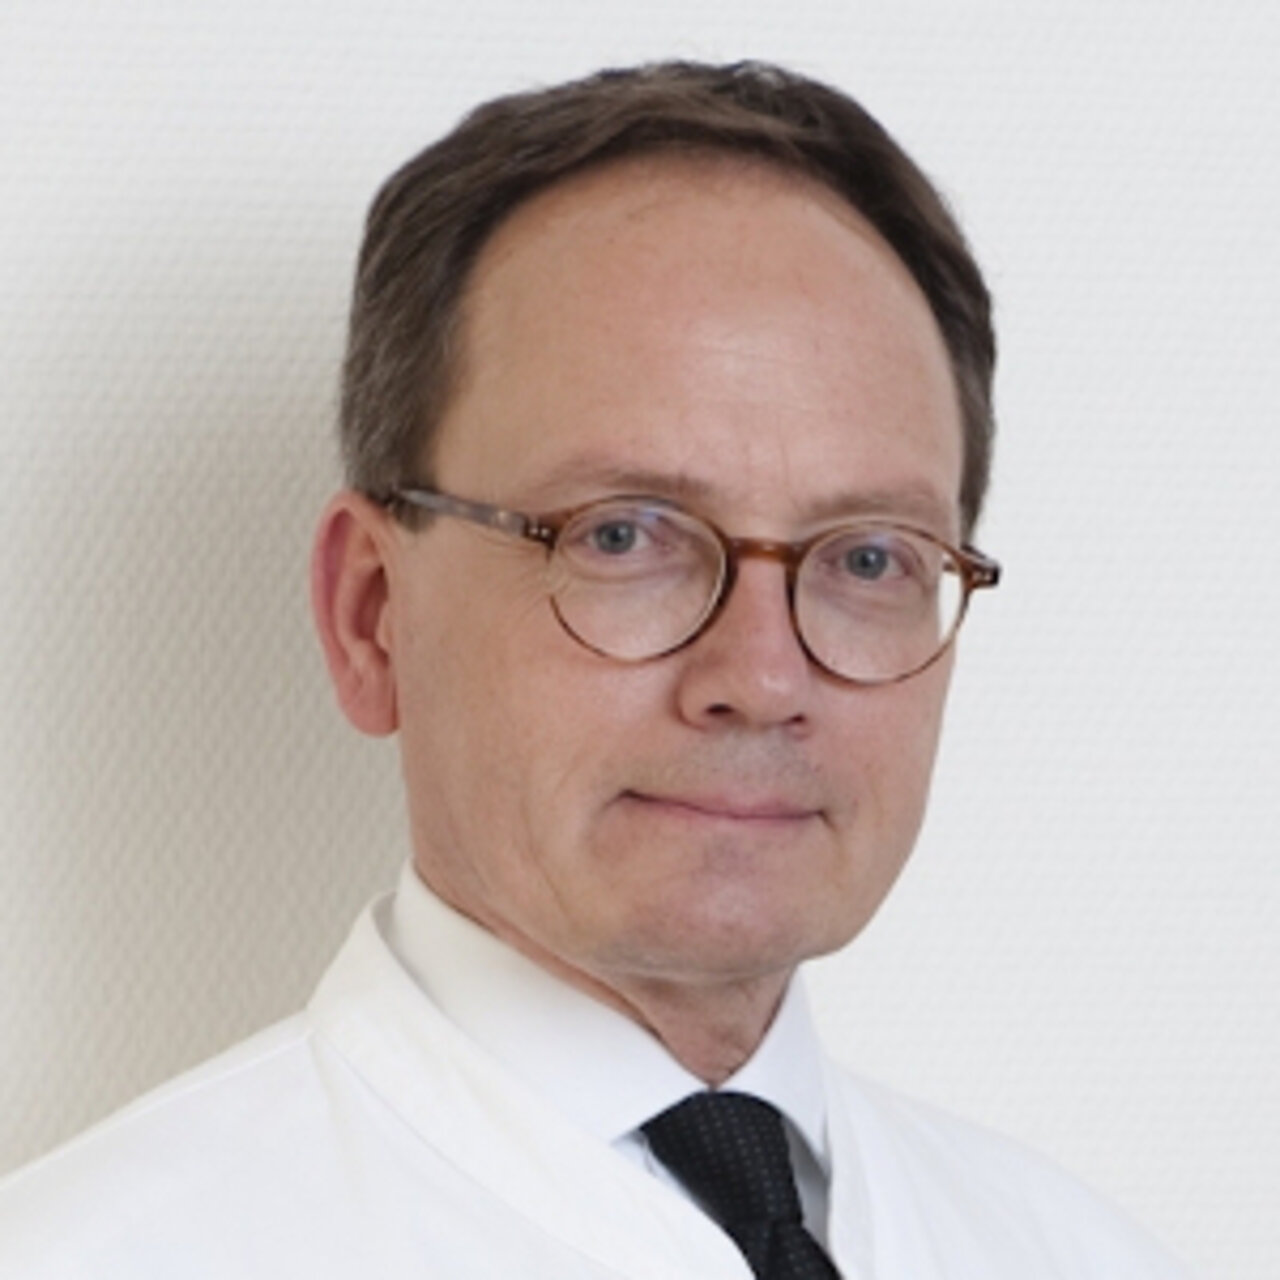 Specialist in Prevention / Diagnostics Professor Dr Uwe Nixdorff, F.E.S.C. - Portrait